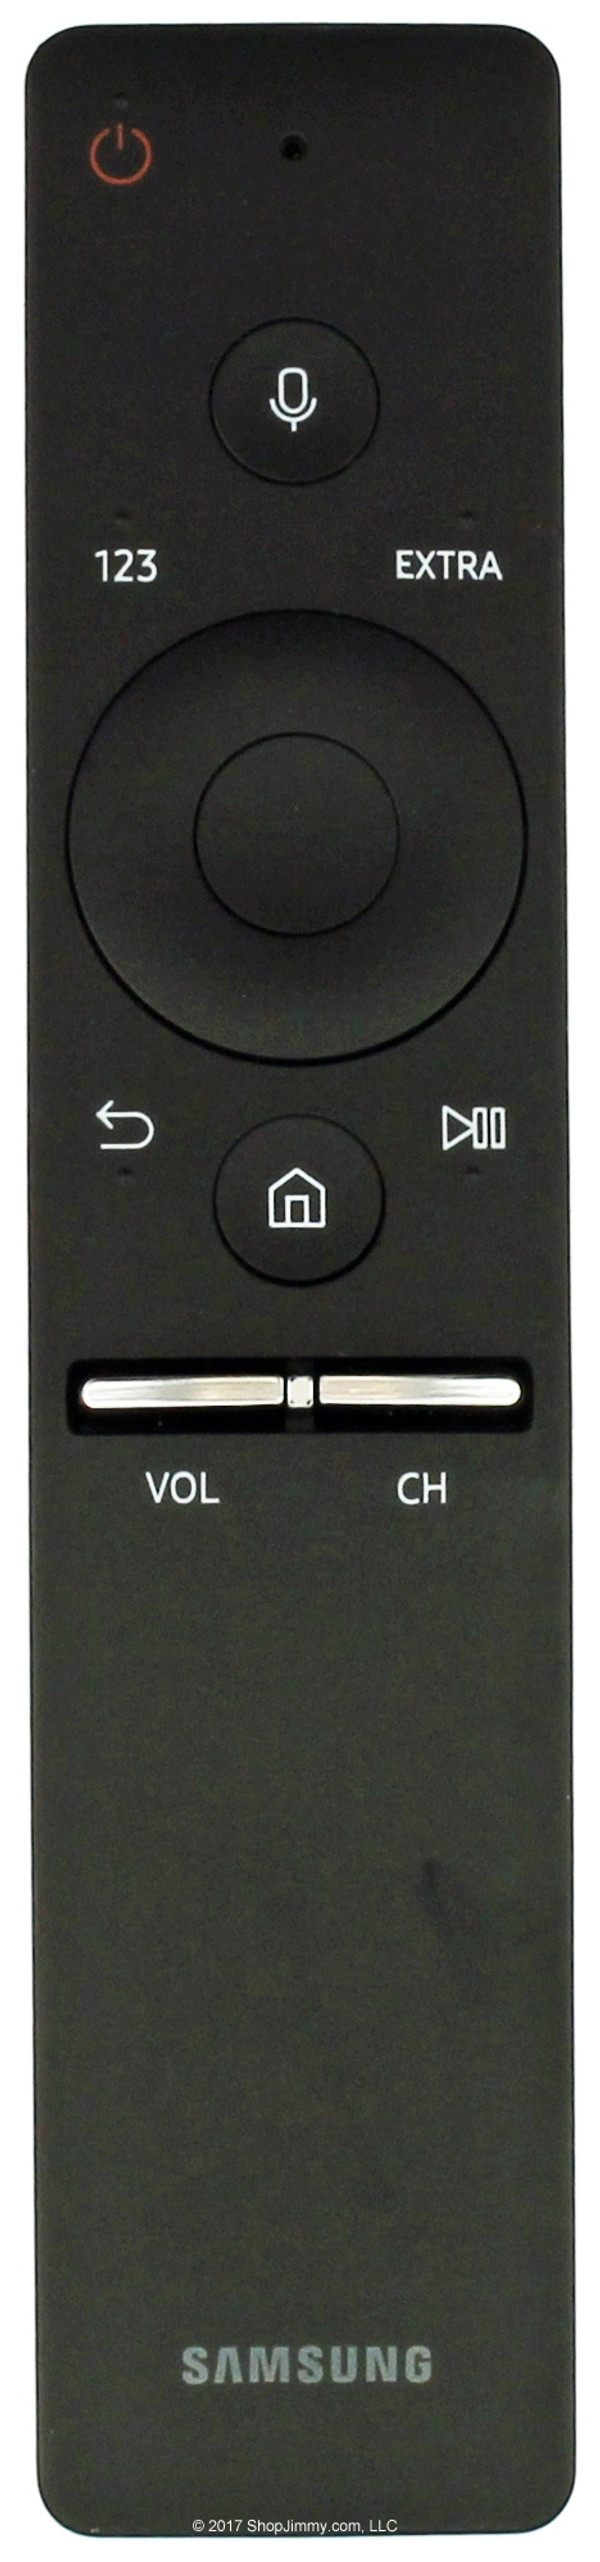 Samsung BN59-01241A Remote Control - Open Bag